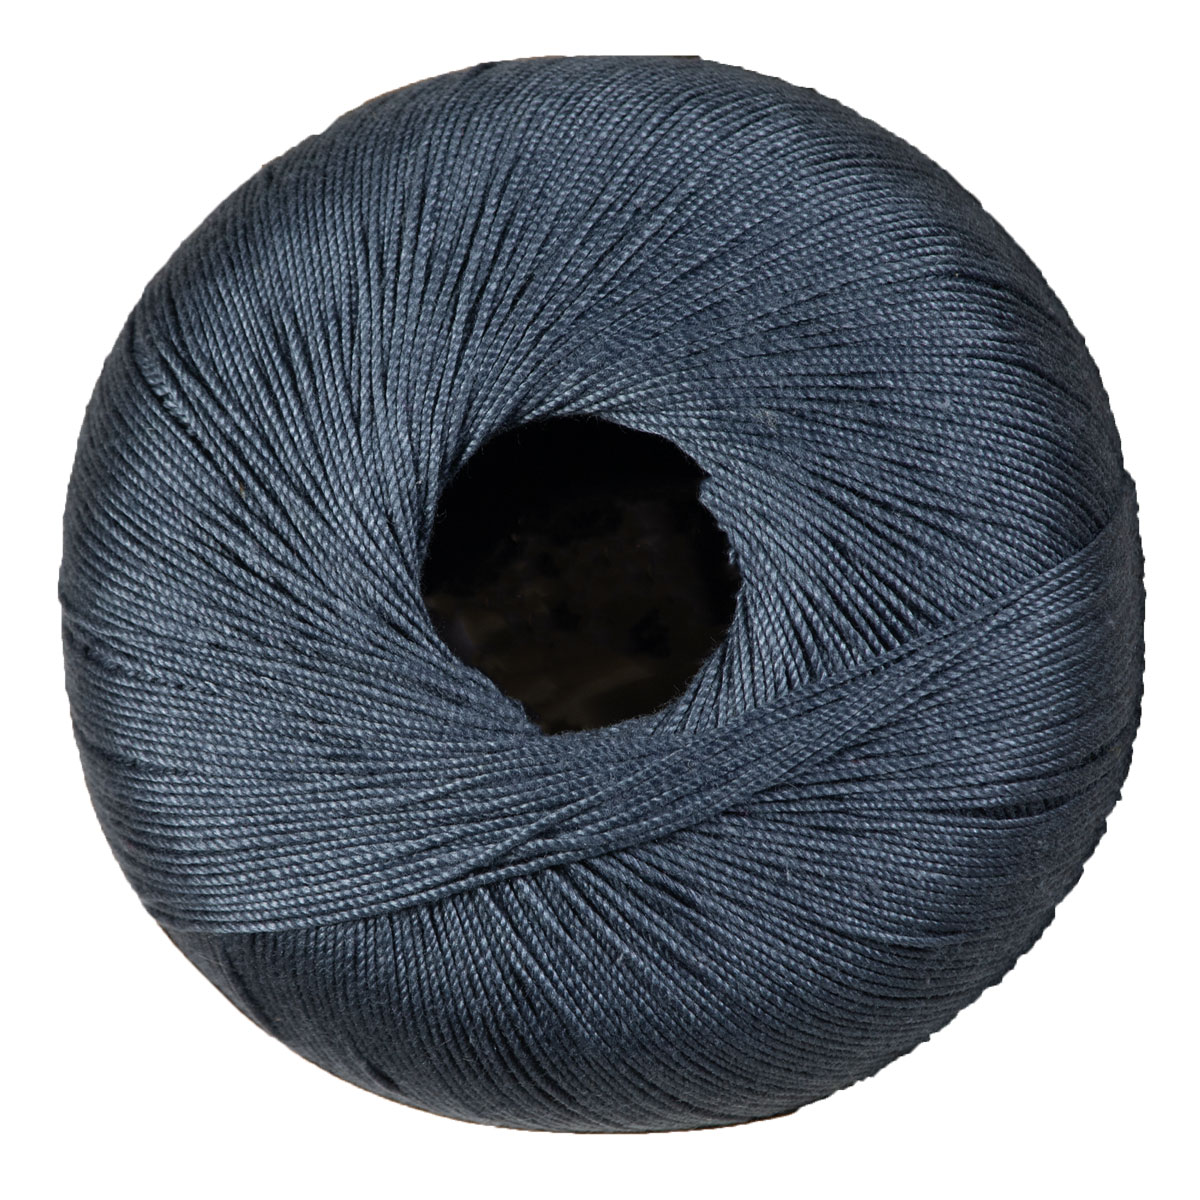 Scheepjes Maxi Sugar Rush Yarn - 393 Charcoal Description at Jimmy Beans Wool